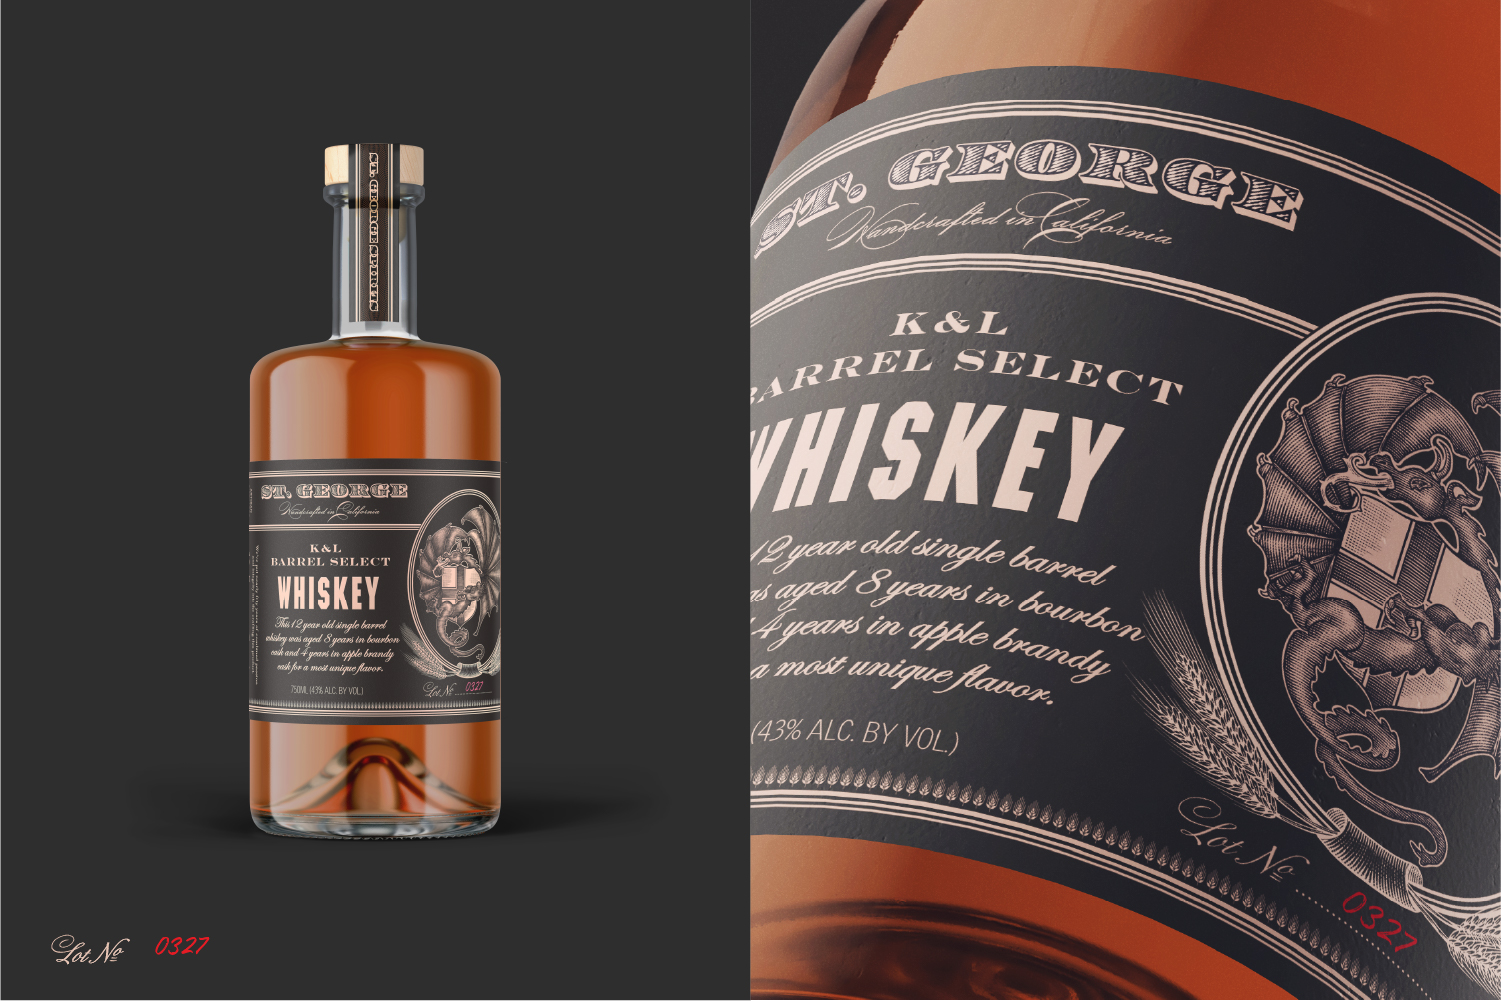 St. George Spirits K&L Barrel Select Whiskey packaging design concept.